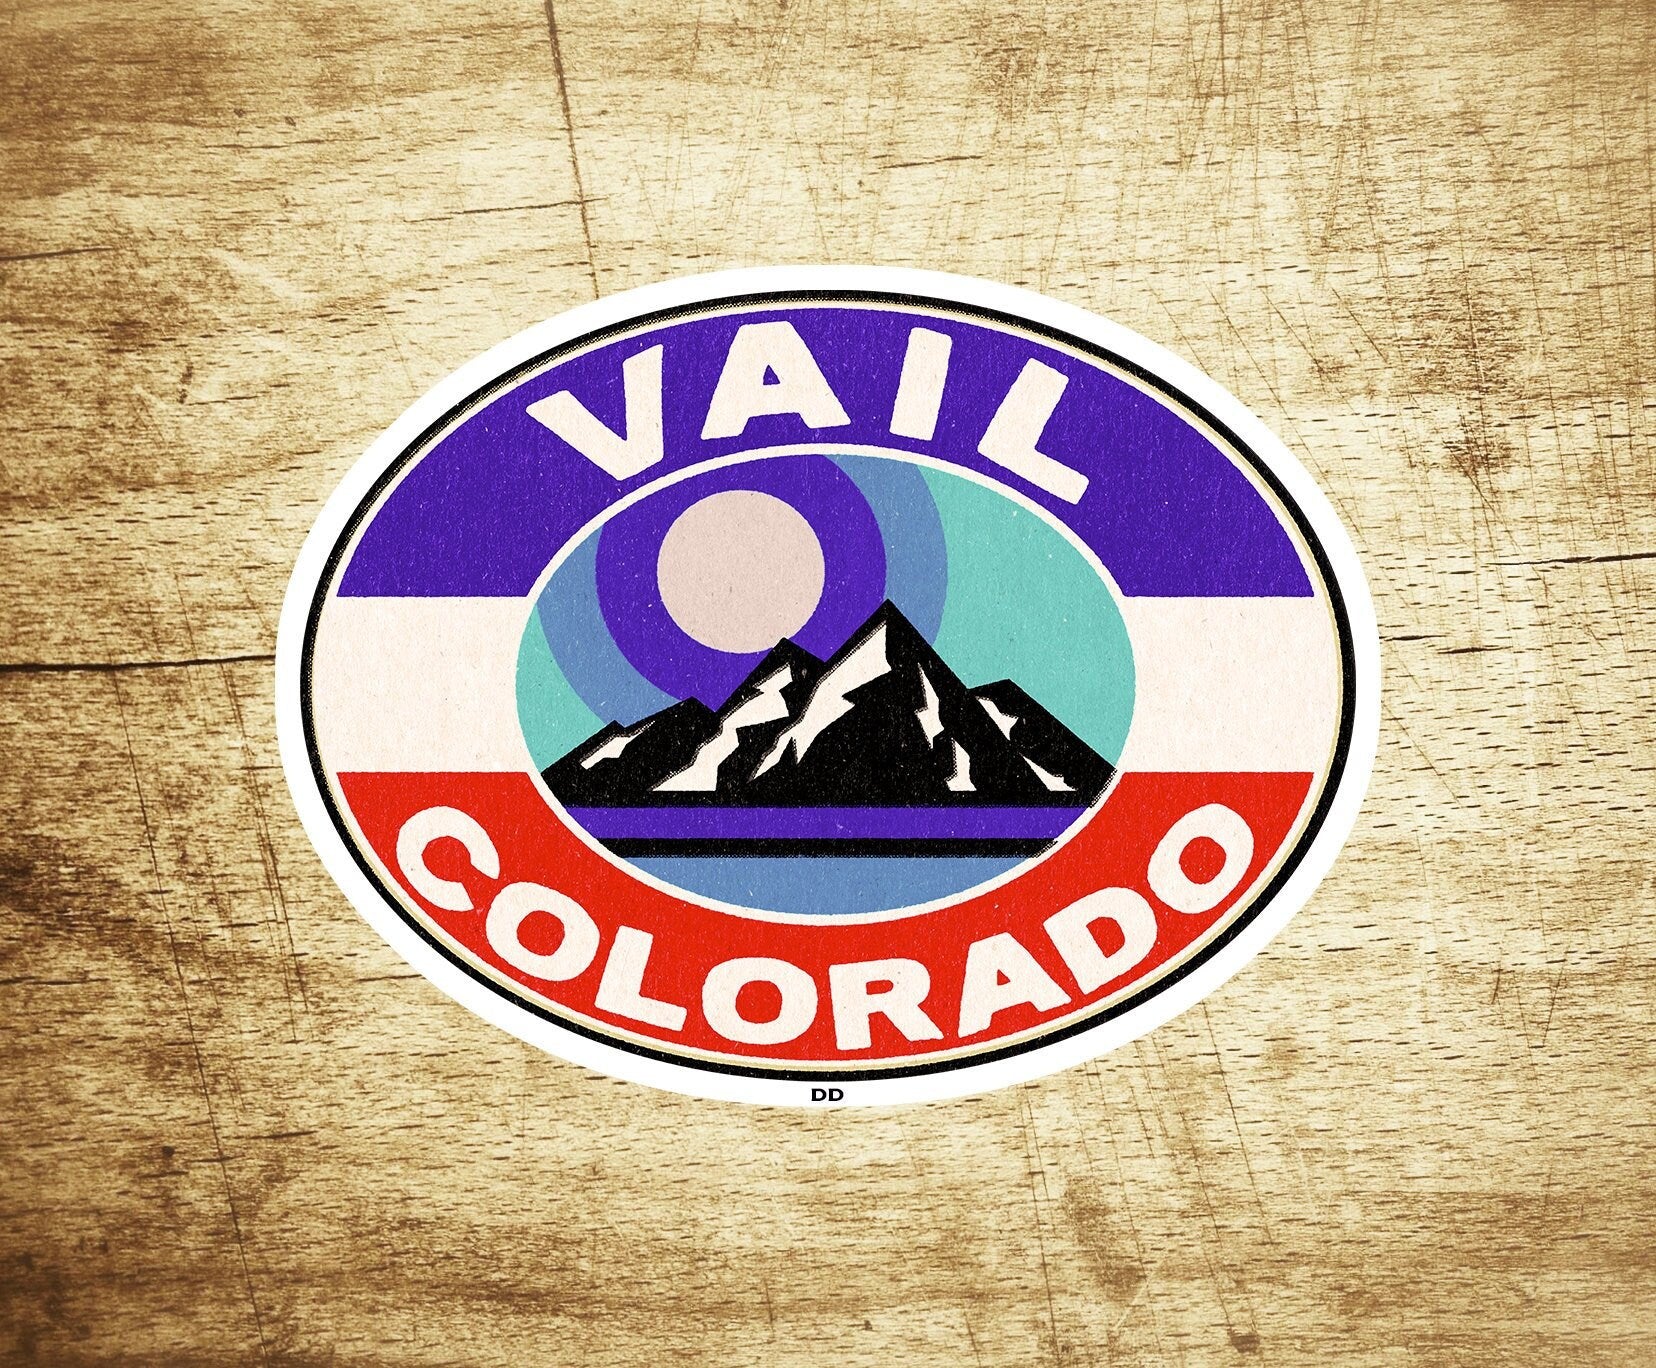 Vail Colorado Decal Sticker 3.75" X 2.75" Skiing Vinyl Ski Snowboarding